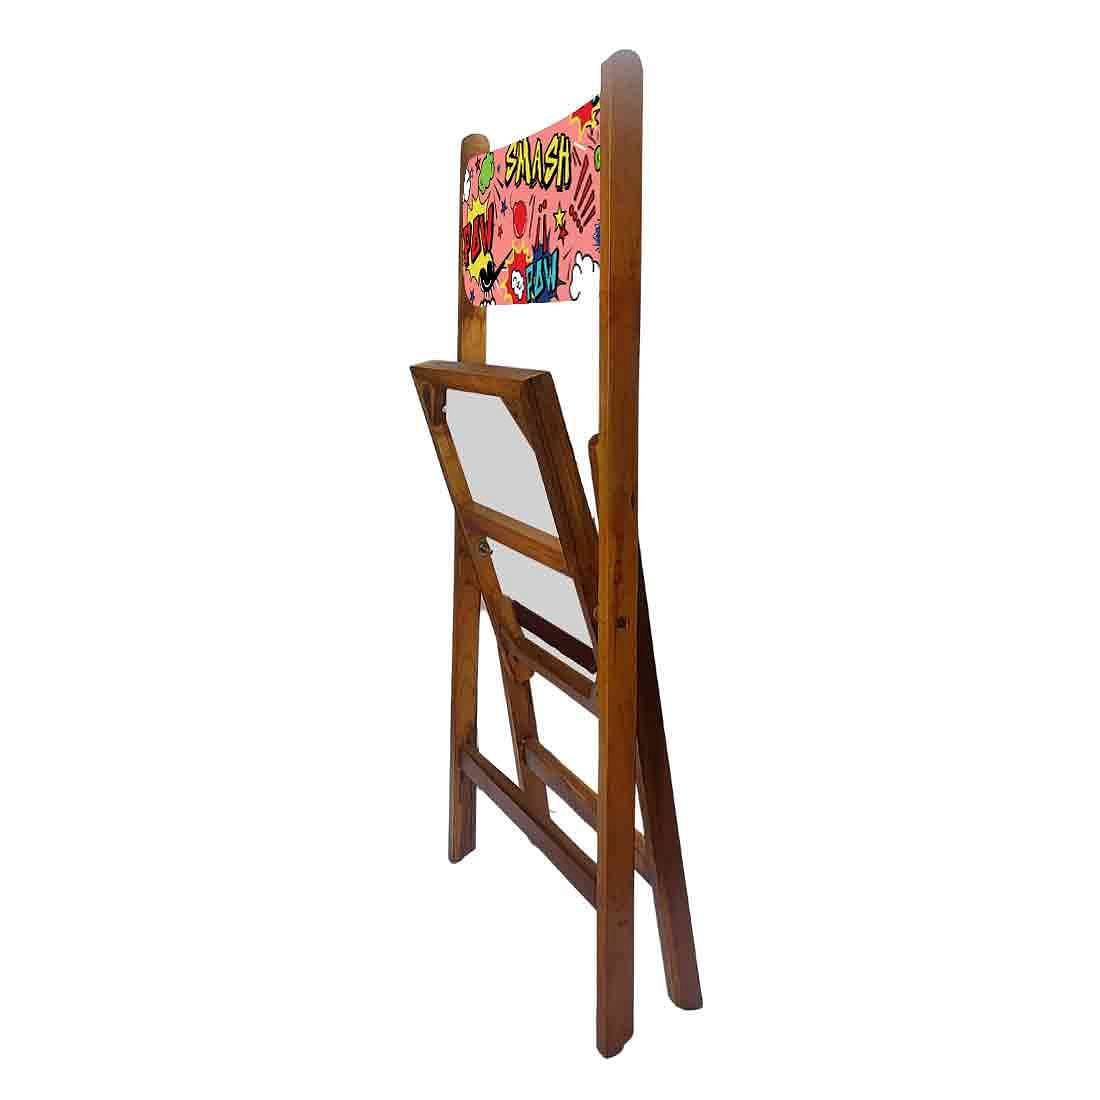 Nutcase Teak Wood Folding Chair For Adults  -  Smash Pink Nutcase